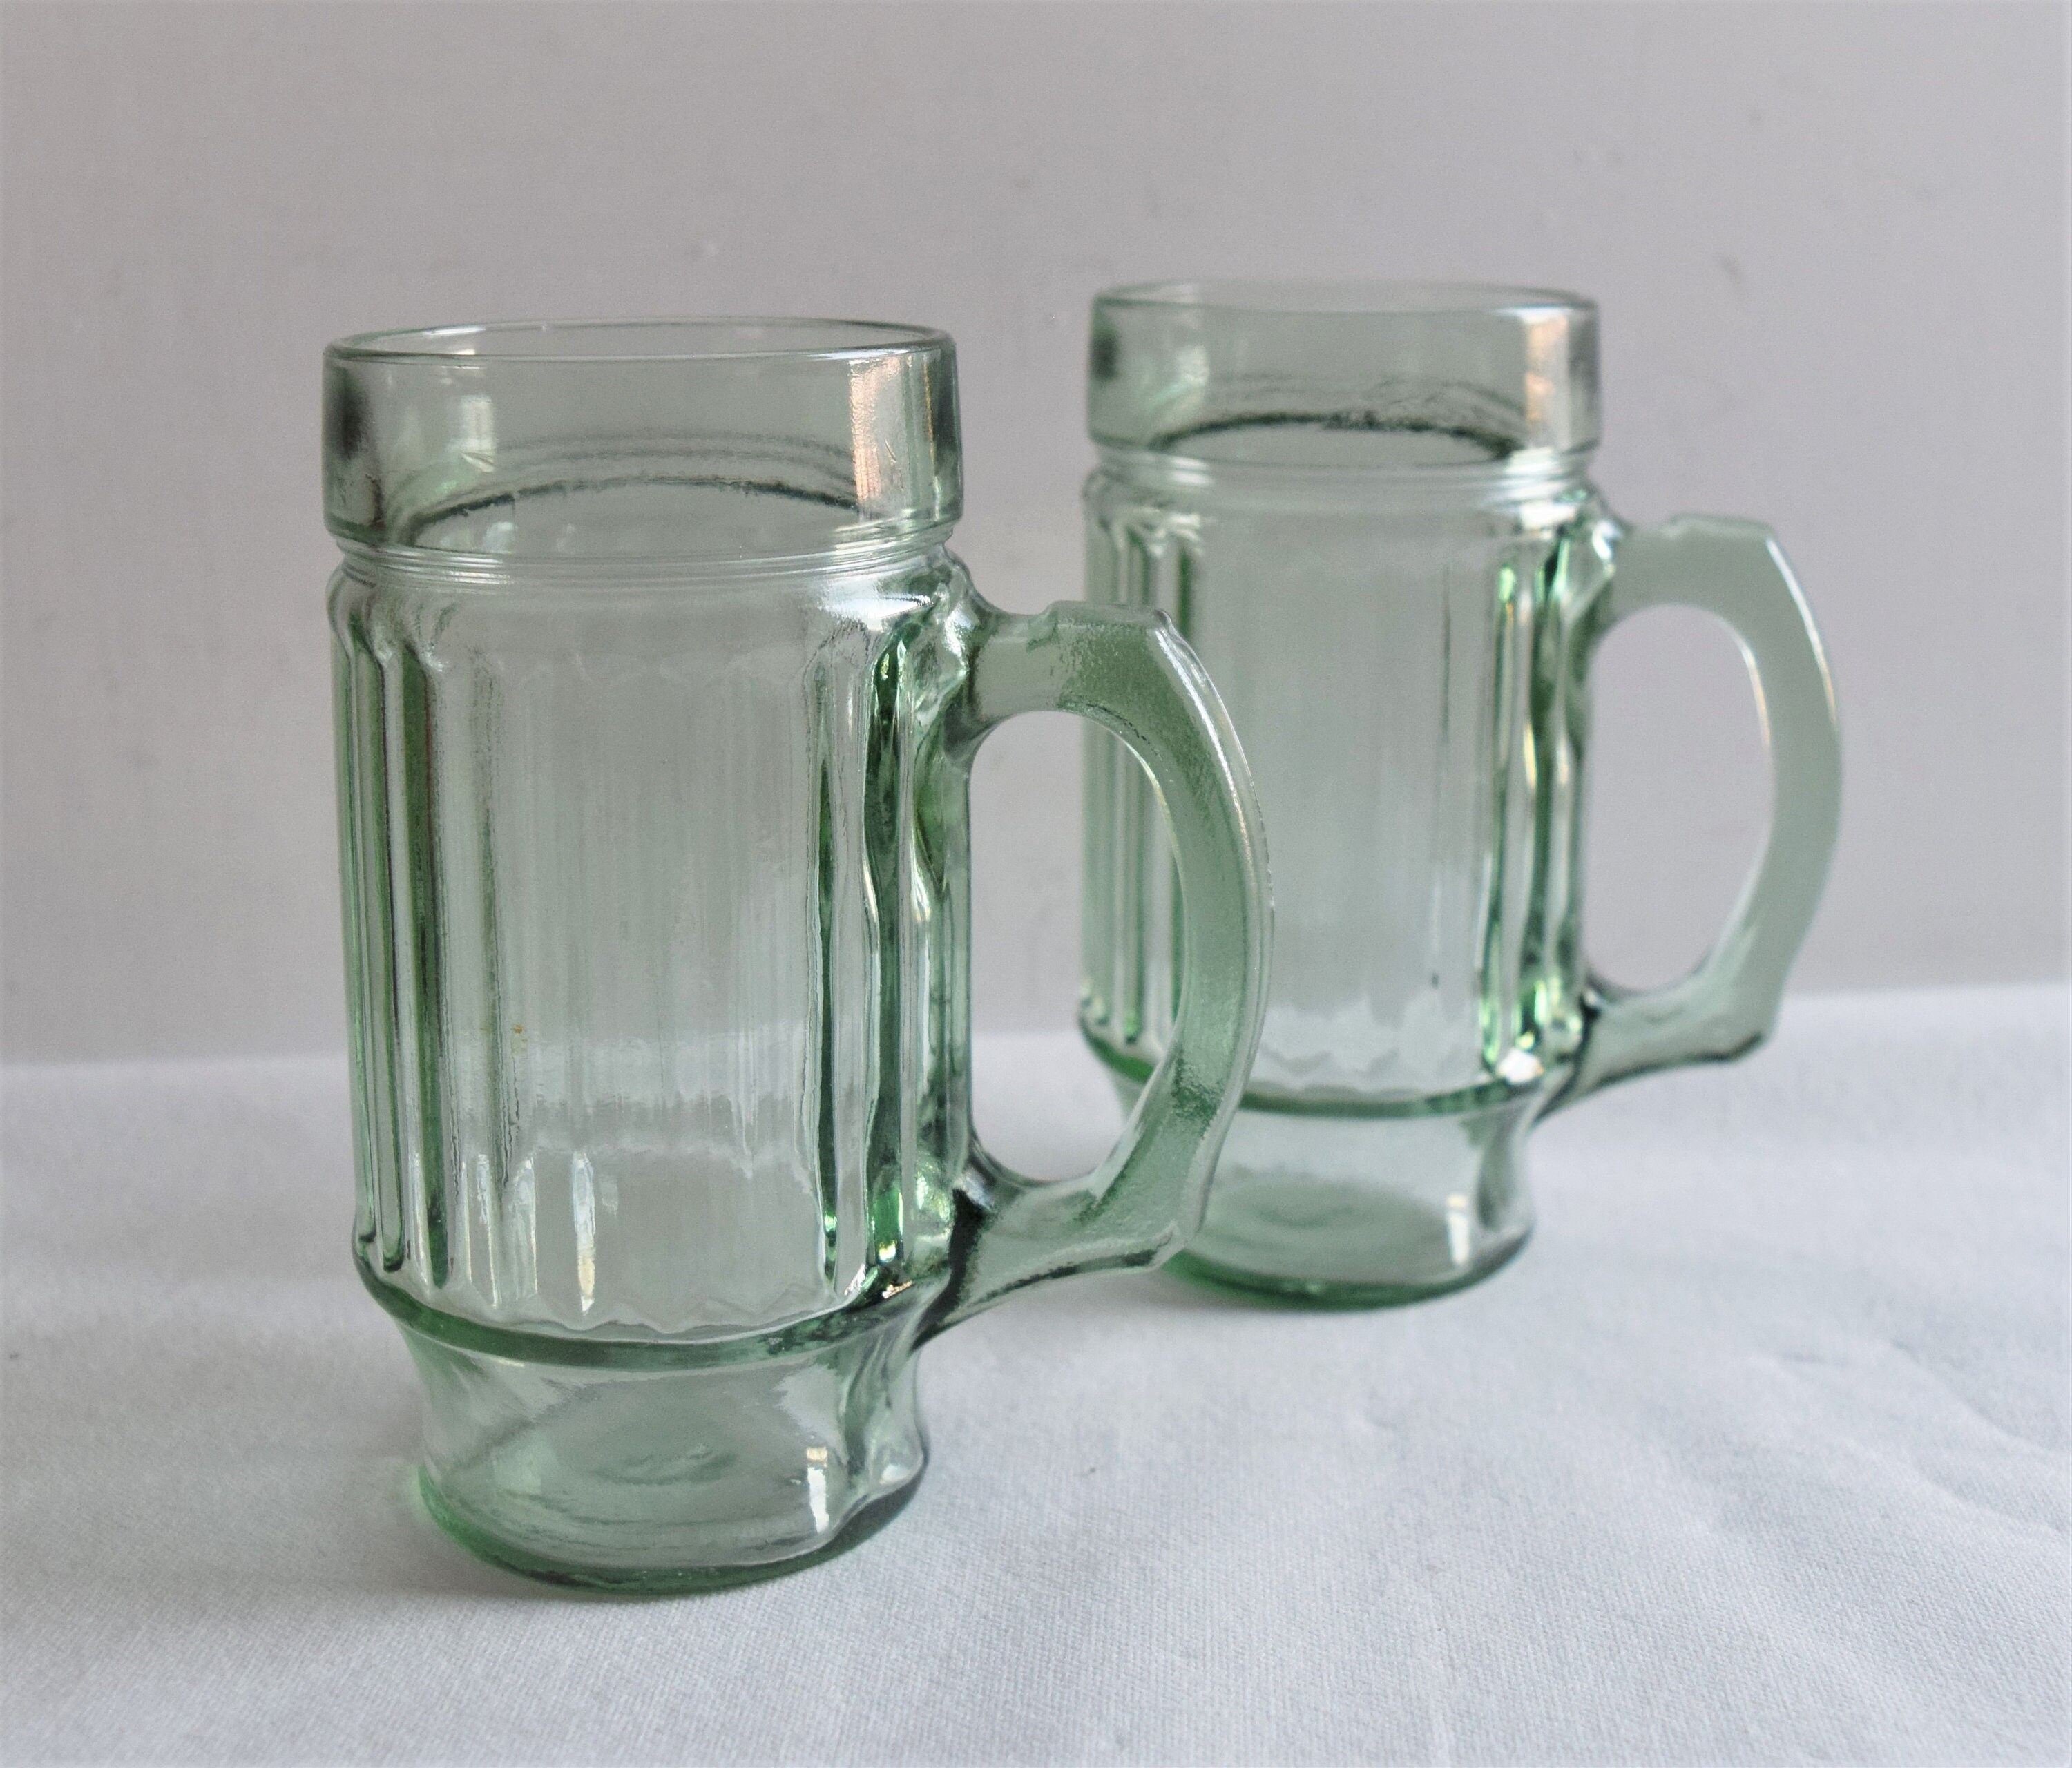 Set of 2 Schmidt Beer Glasses/ Wild Turkey and Bear Motif Glass